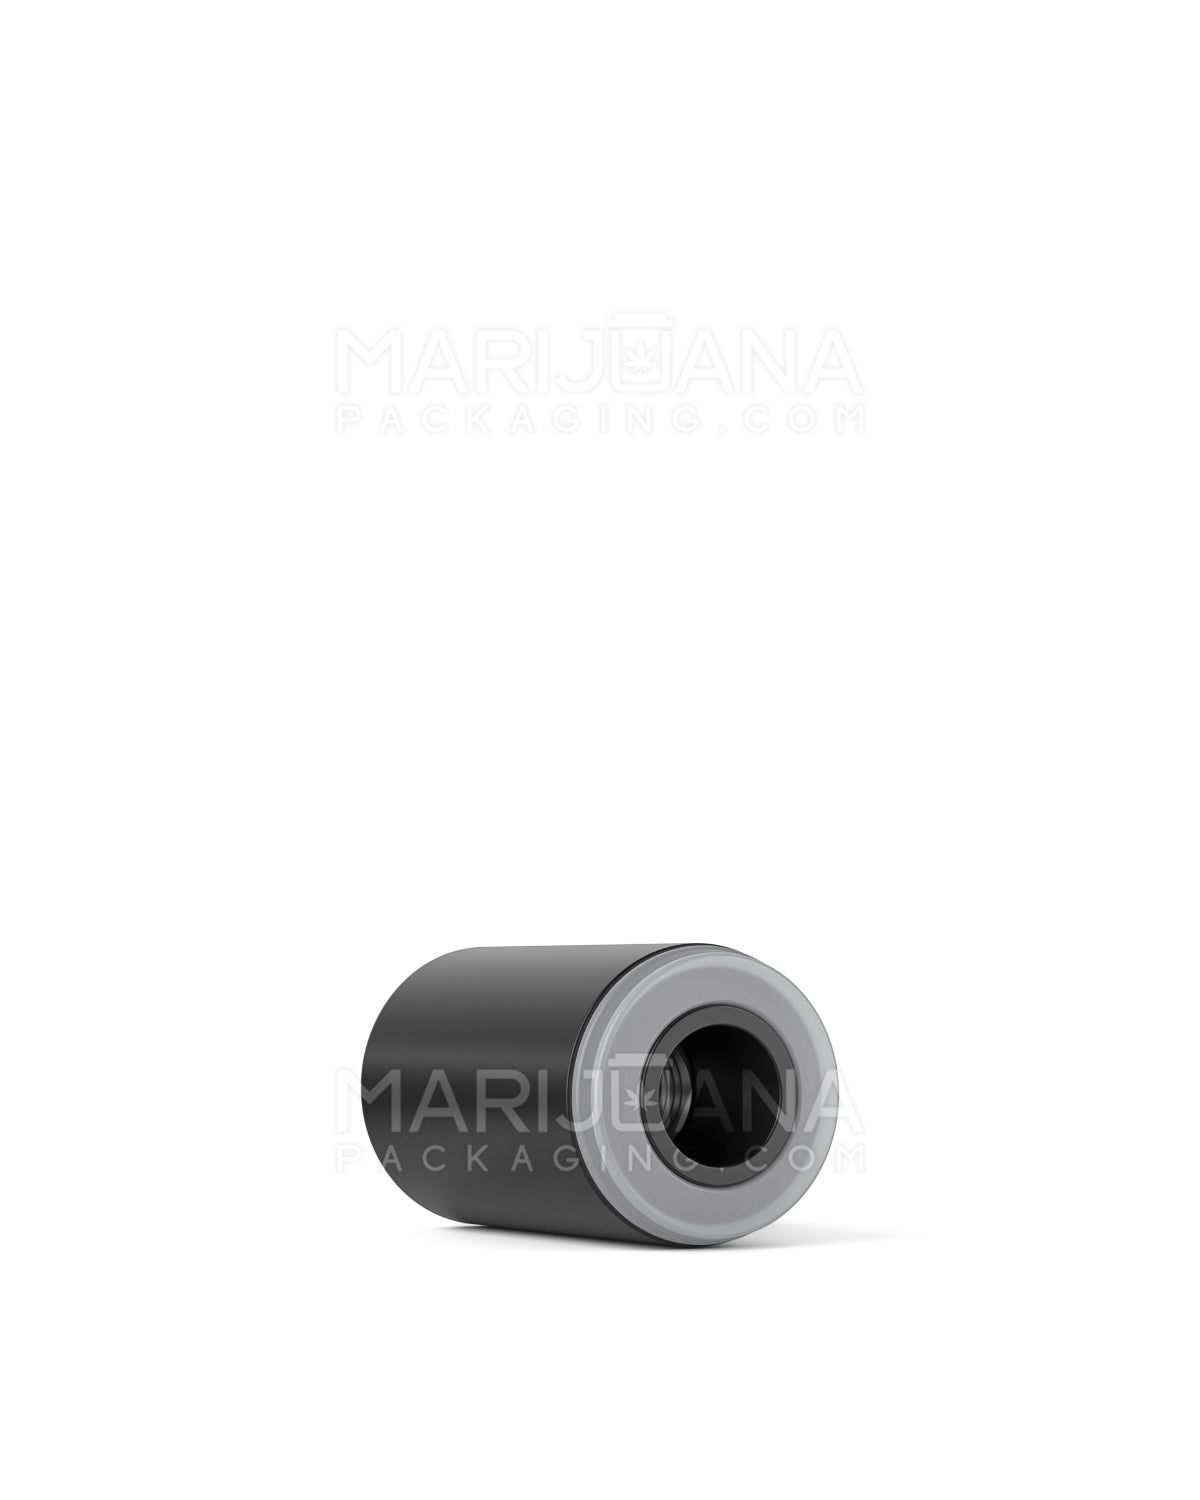 AVD | Barrel Vape Mouthpiece for Glass Cartridges | Black Plastic - Eazy Press - 600 Count - 6